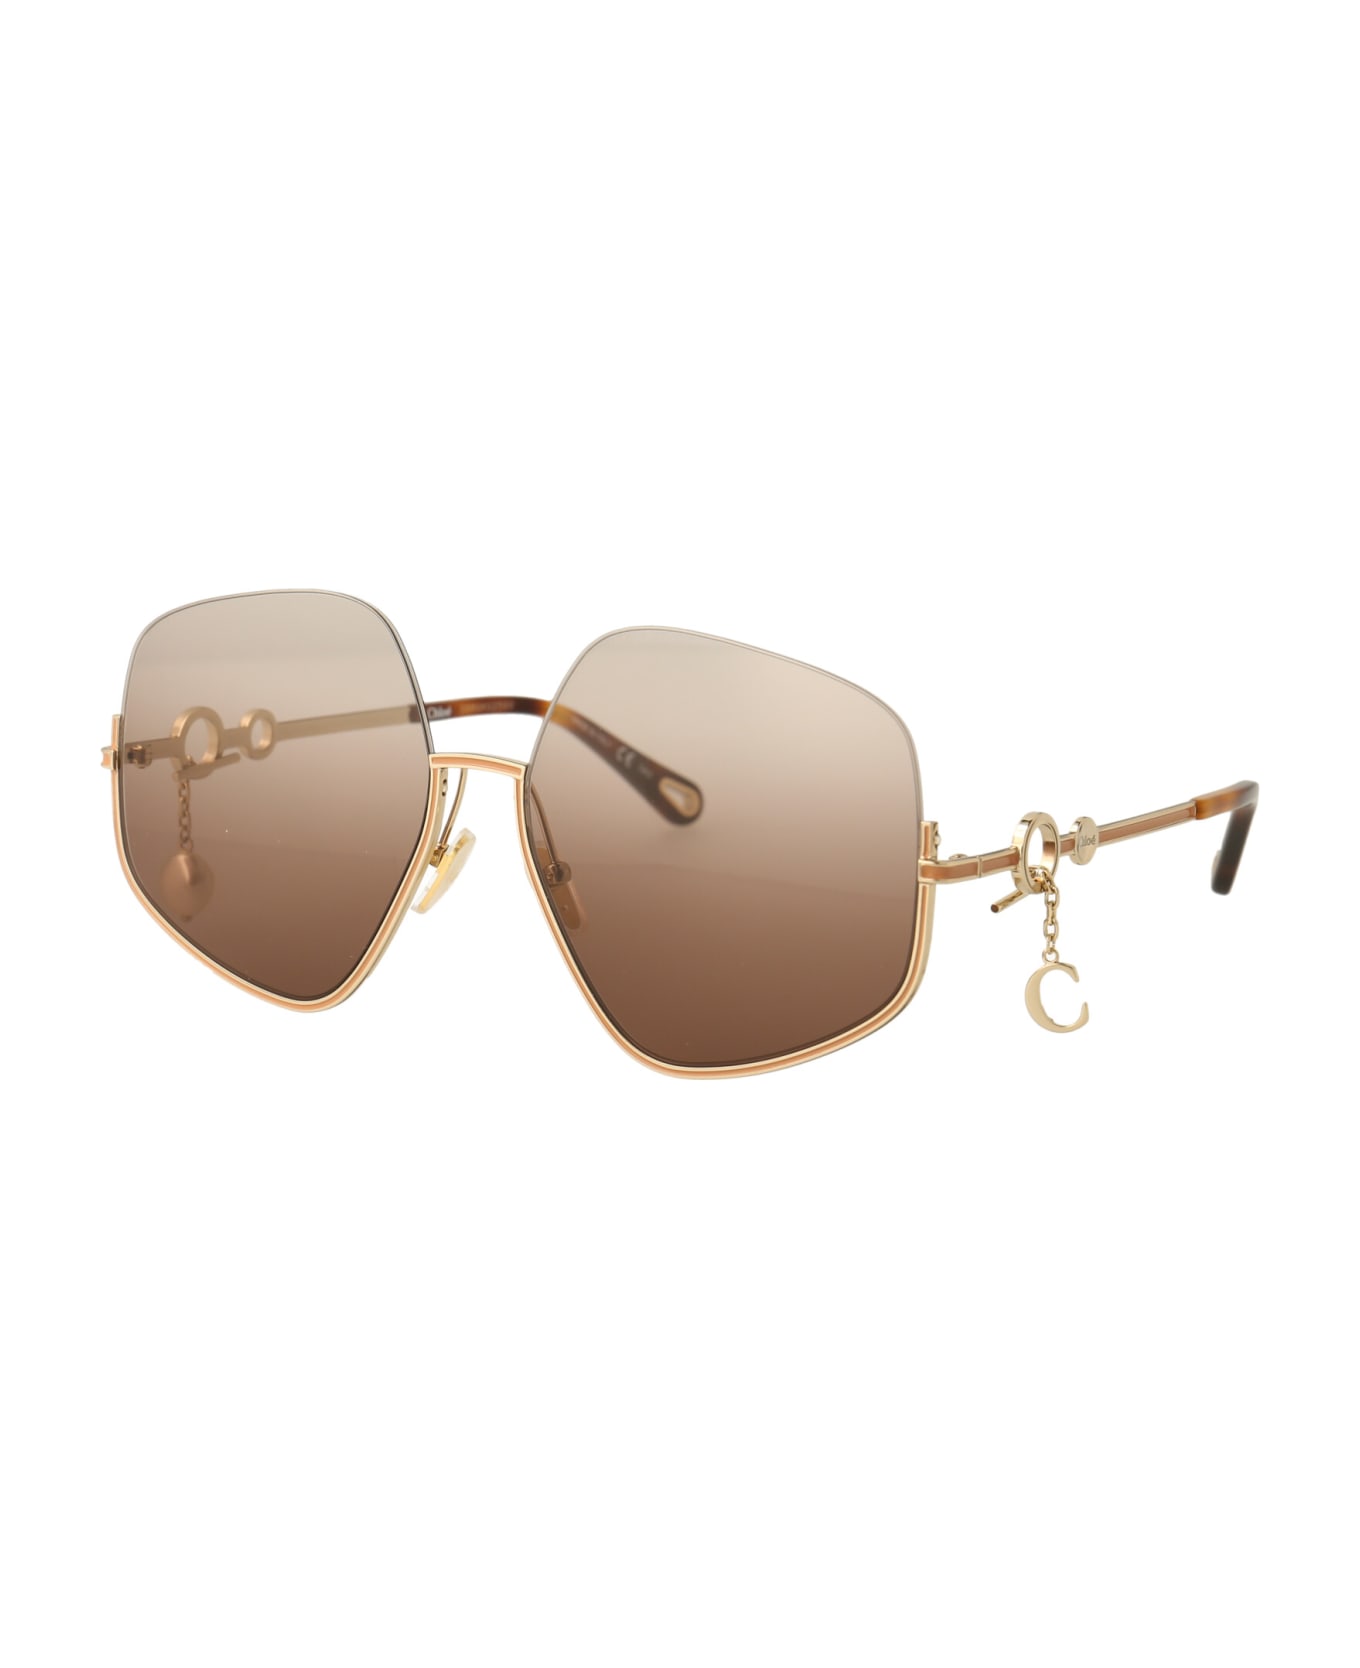 Chloé Eyewear Ch0068s Sunglasses - 003 GOLD GOLD BROWN サングラス